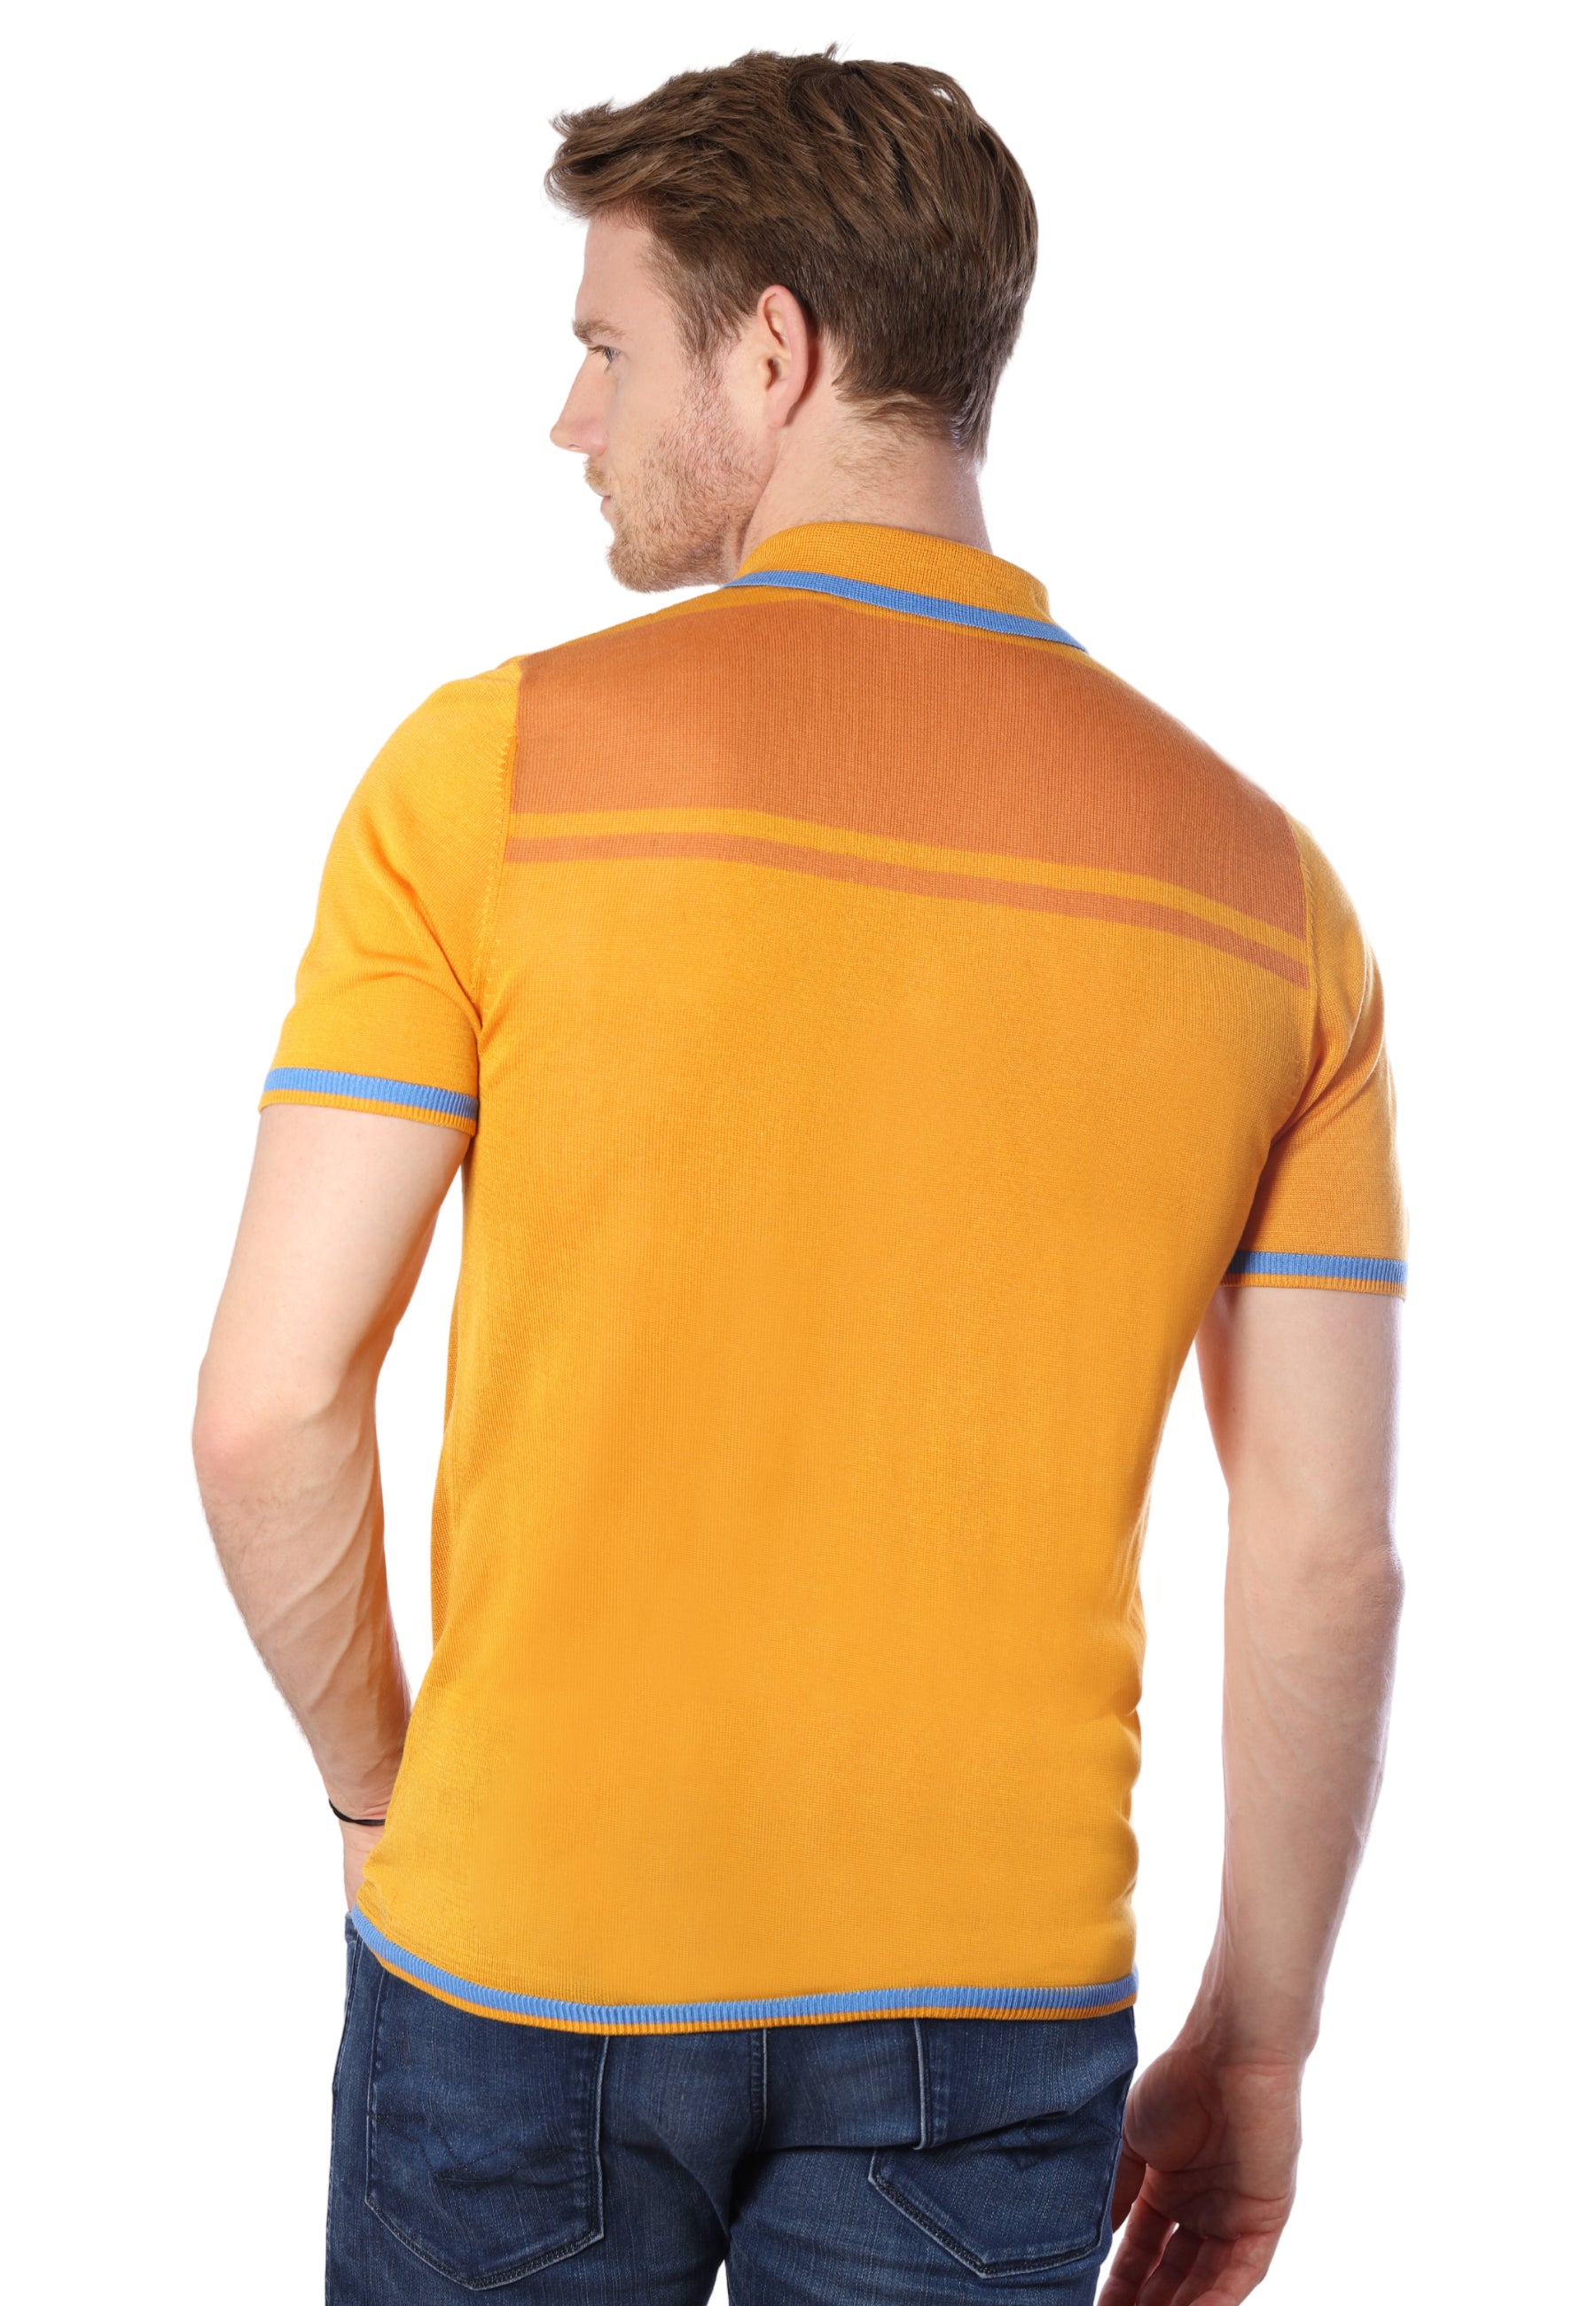 Men’s Two-Tone Contrast Tencel Polo | Orange Size S M L XL XXL | Bellemere New York 100% Sustainable Fashion | 100% Tencel | Tennis & Golf Polo Shirt